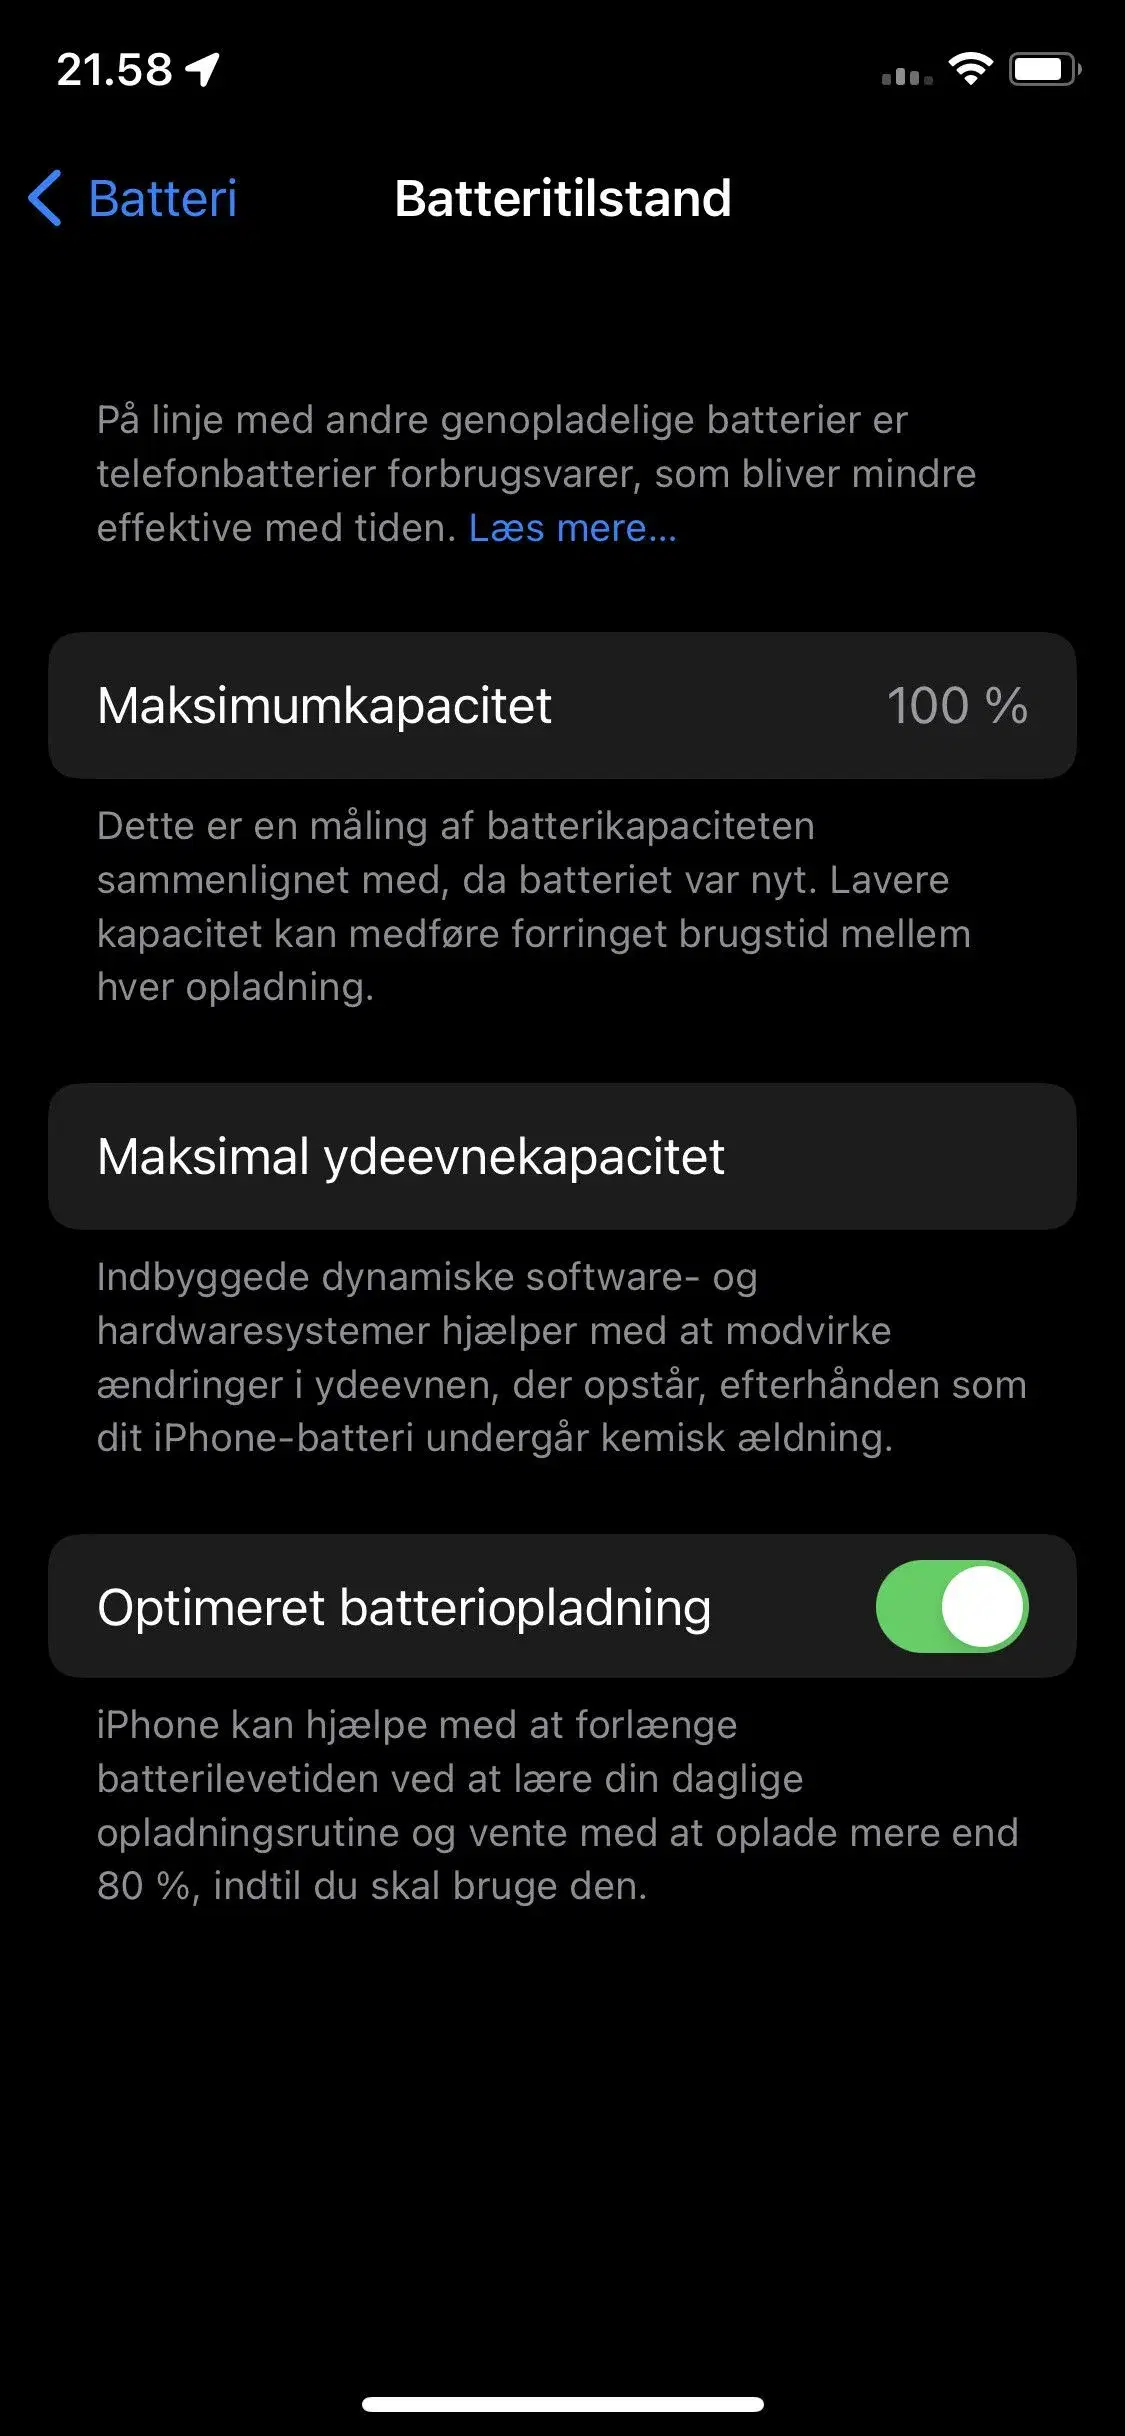 iPhone 11 Pro 256 gb - 100% batterikapacitet